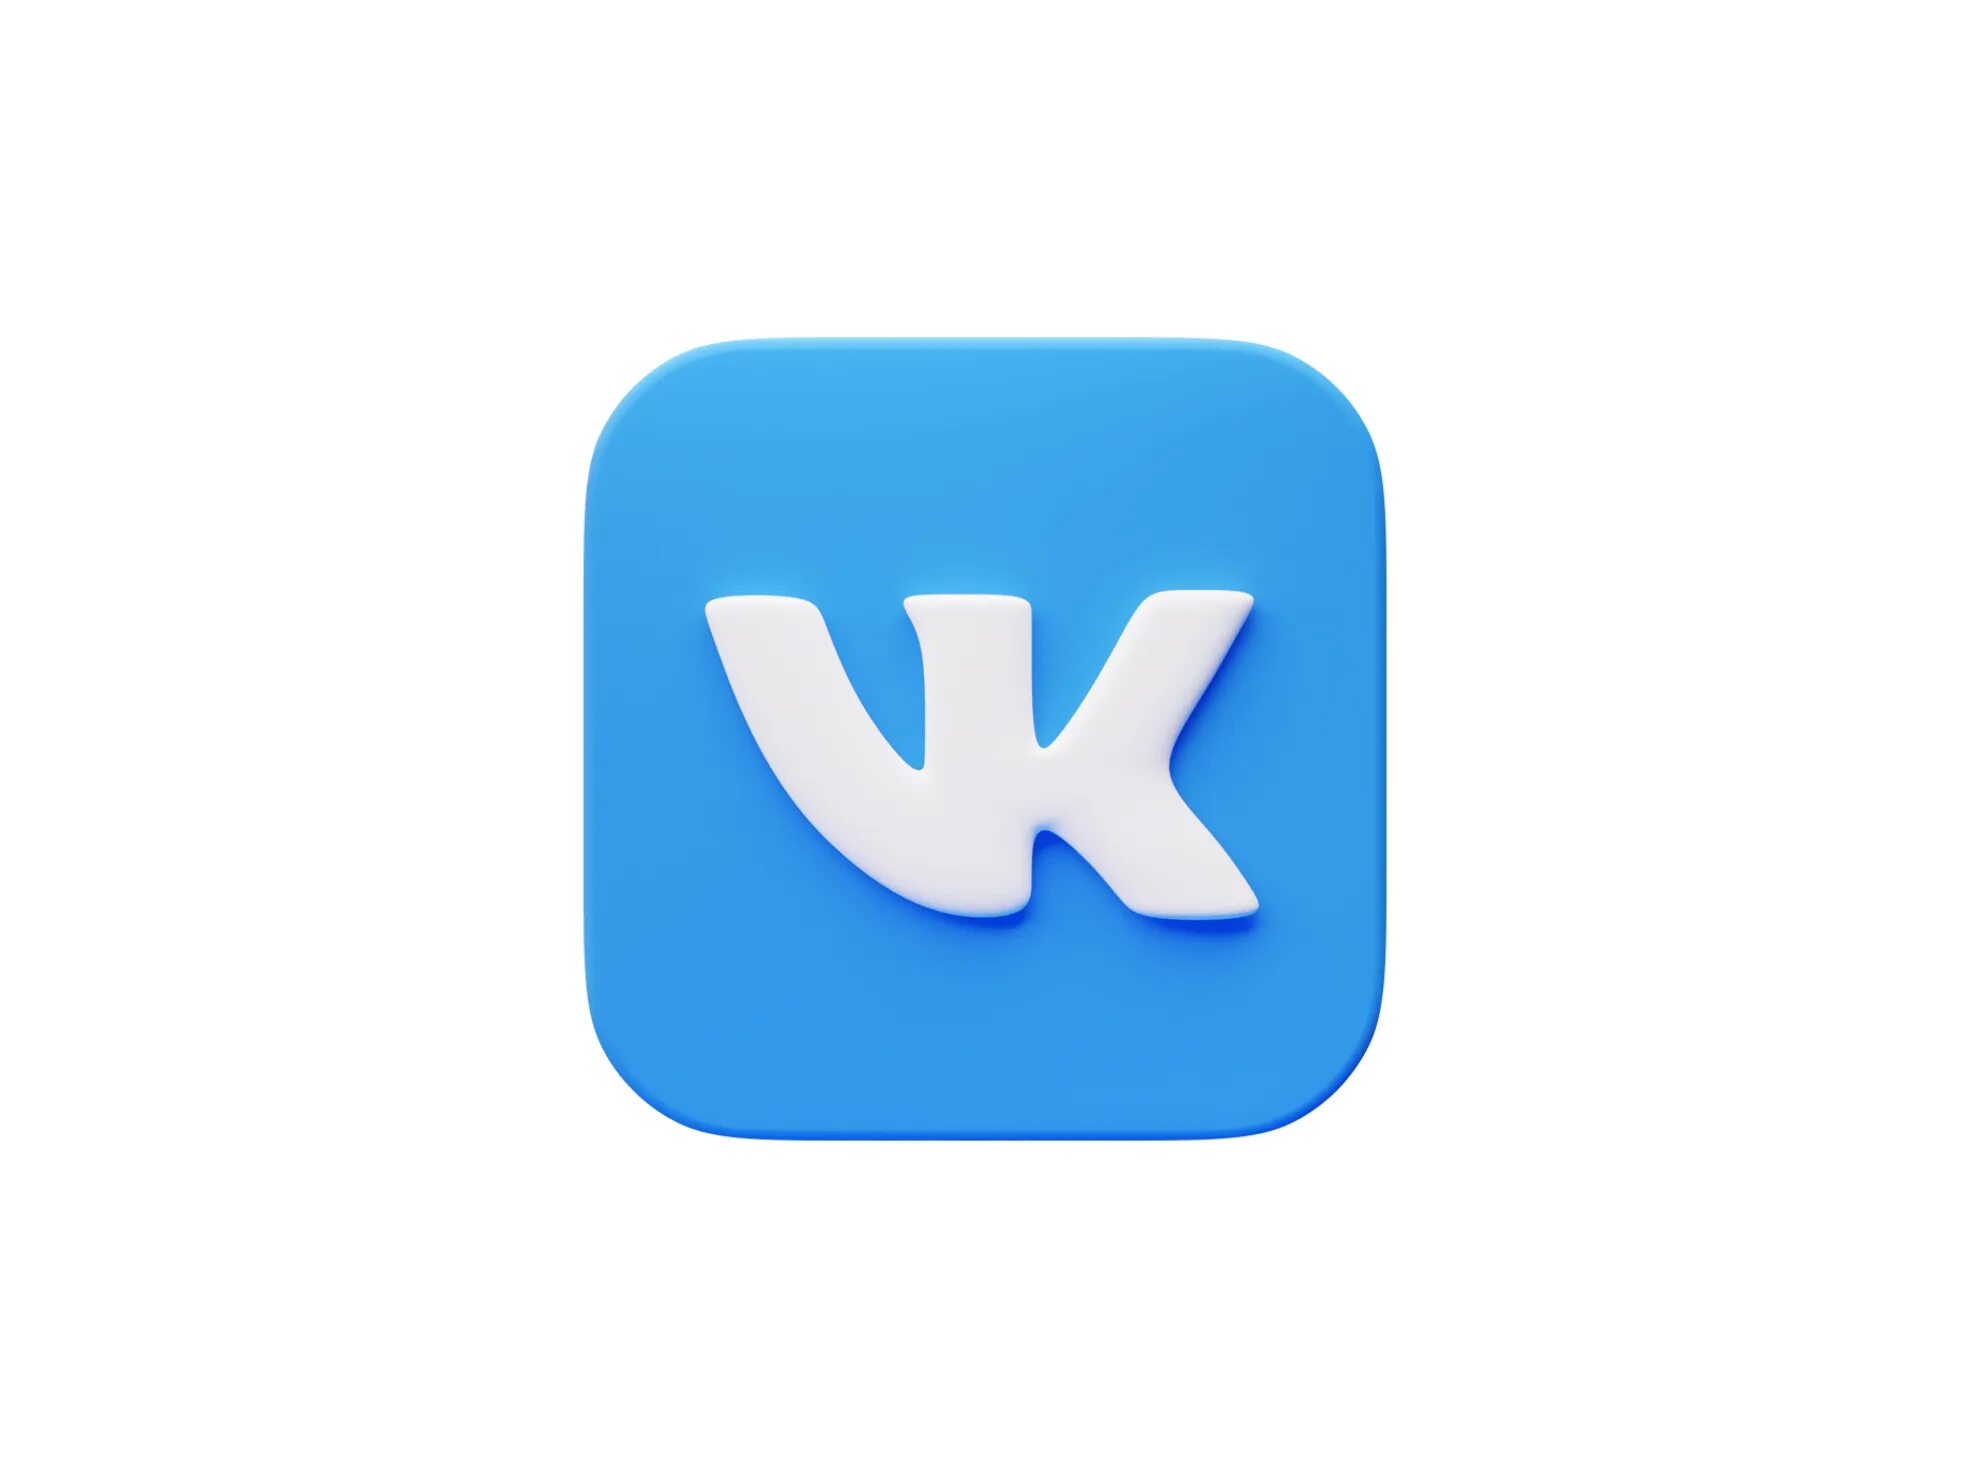 Логотип ВК. Значок ВКОНТАКТЕ для сайта. Иконка ВКОНТАКТЕ на прозрачном фоне. Значок ВК на белом фоне.